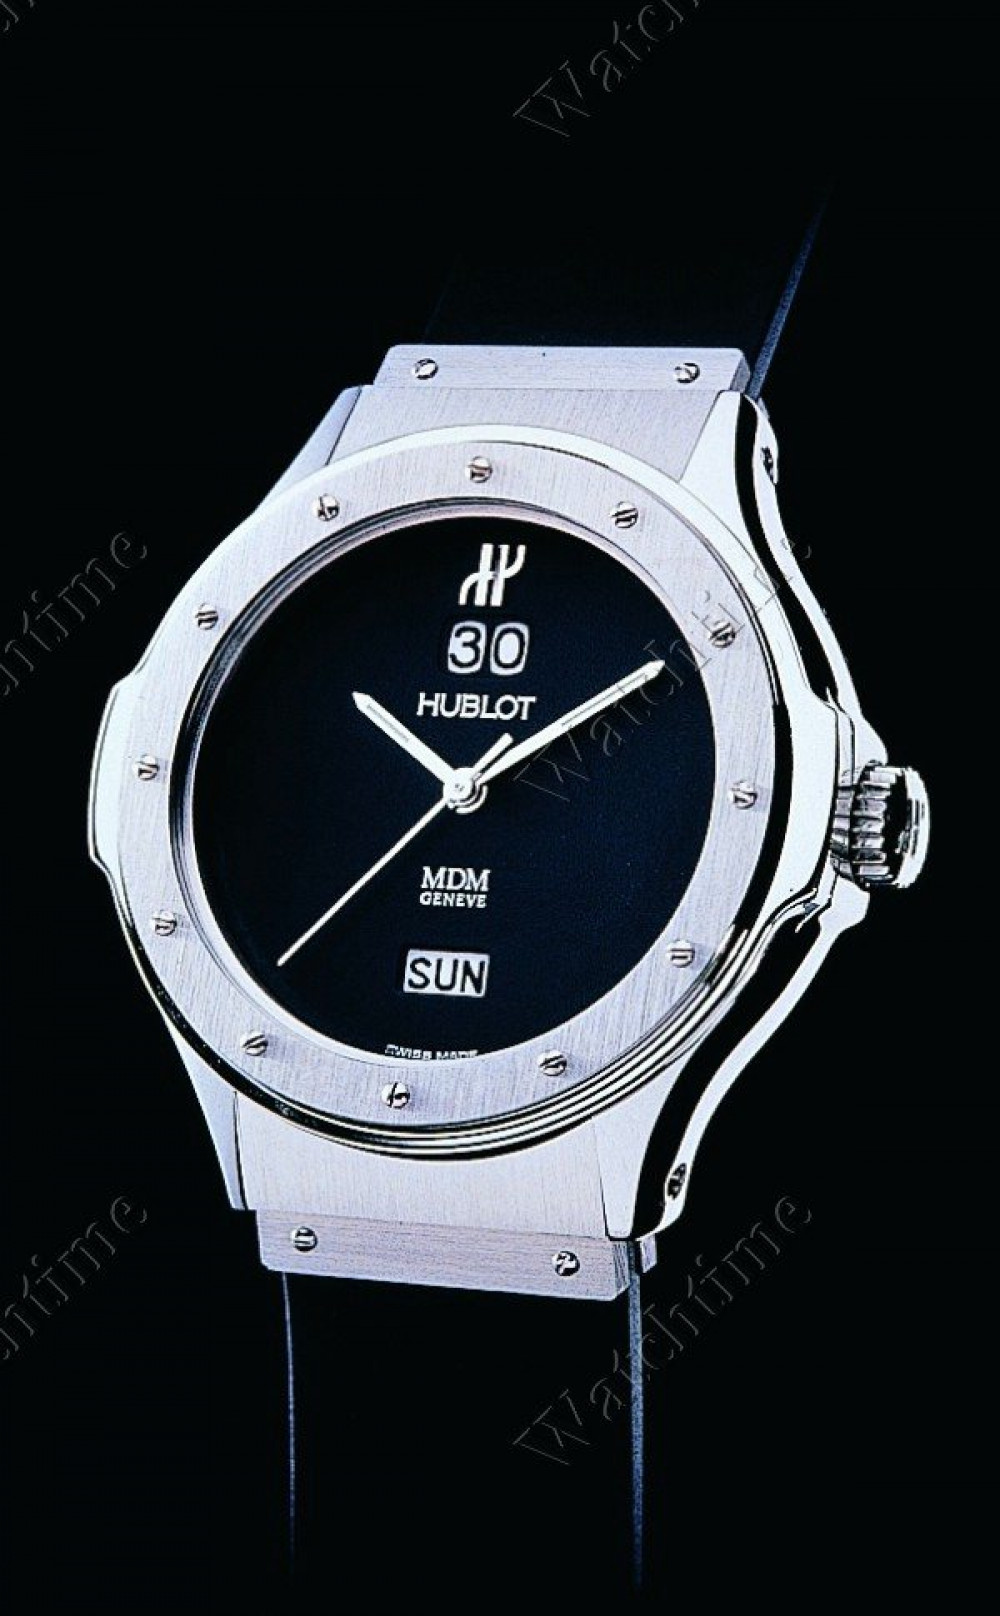 Zegarek firmy Hublot, model Grand Quantième